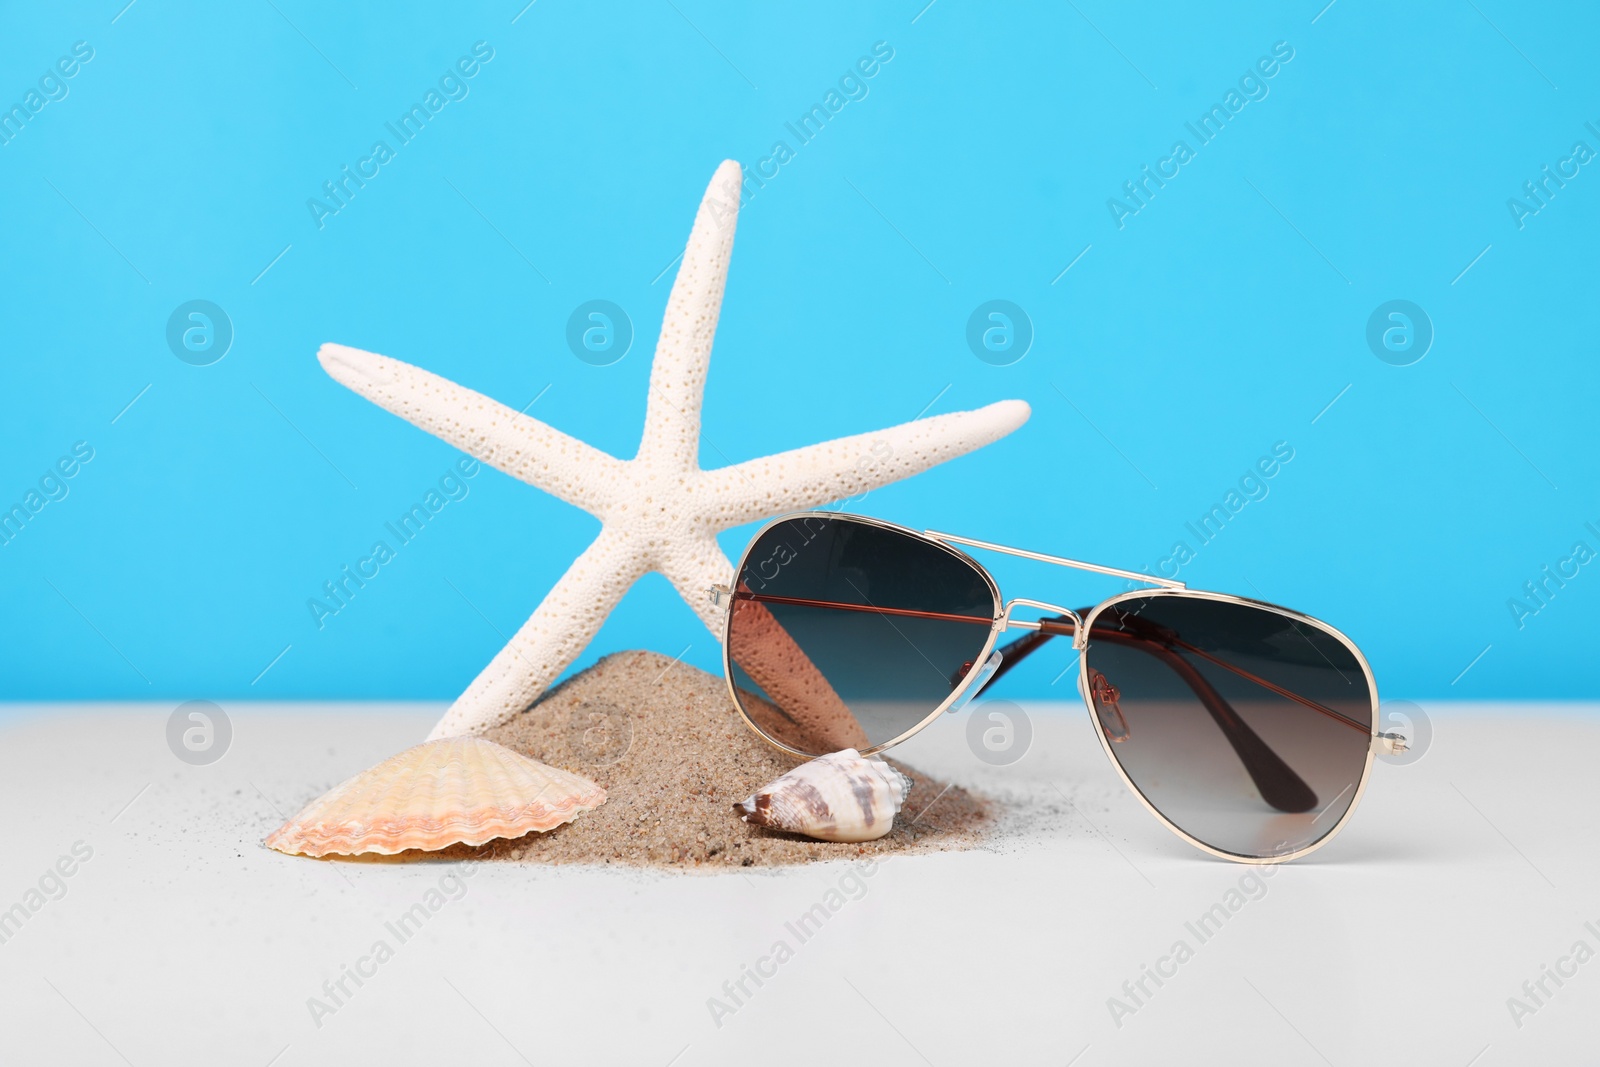 Photo of Stylish sunglasses, seashells, starfish and sand on white table against light blue background